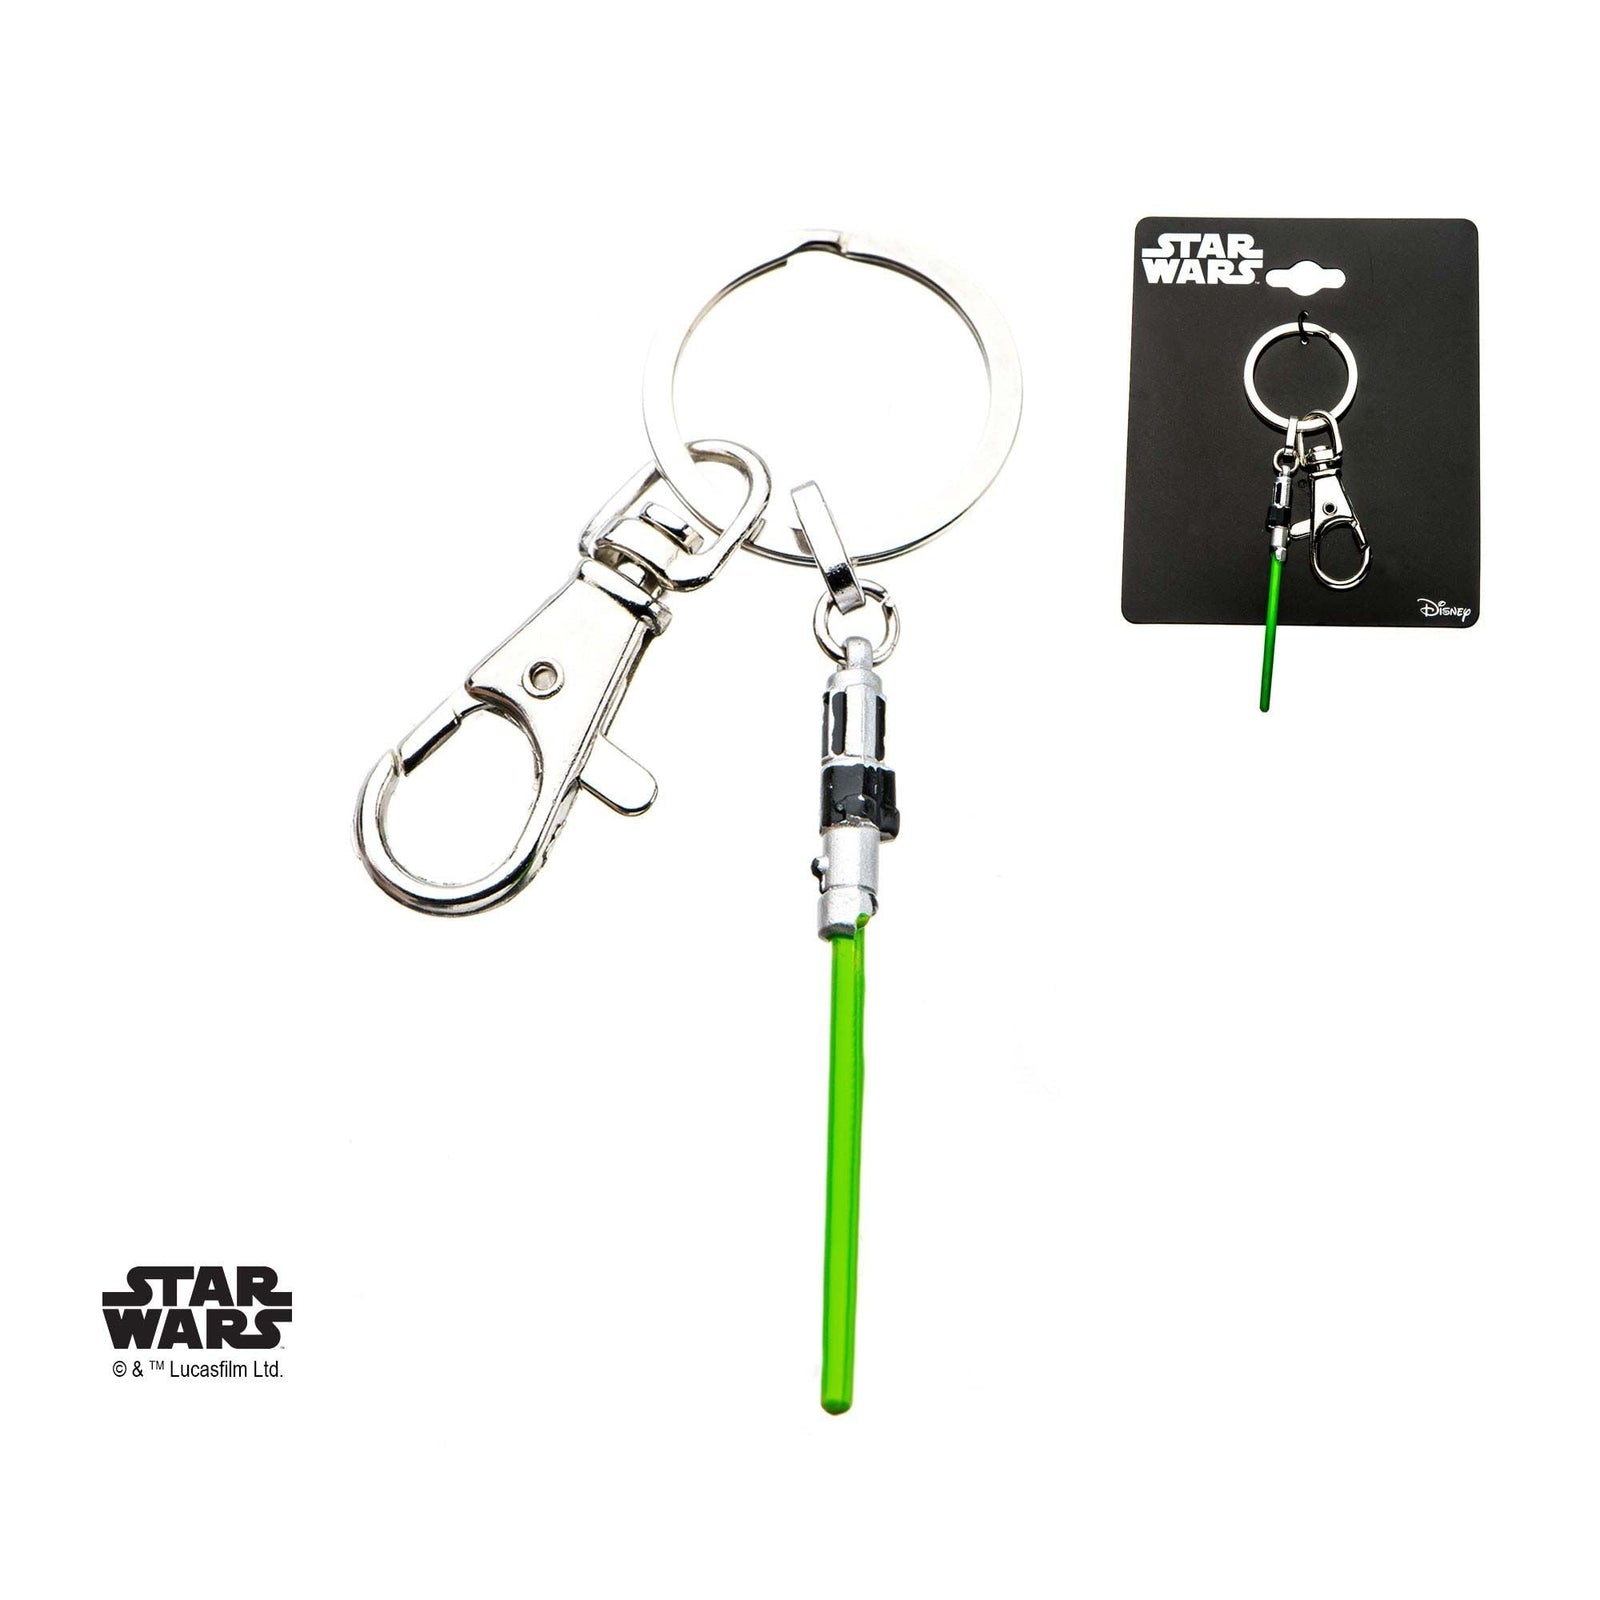 STAR WARS Star Wars Darth Vader Lightsaber Key Chain B -Rebel Bod-RebelBod